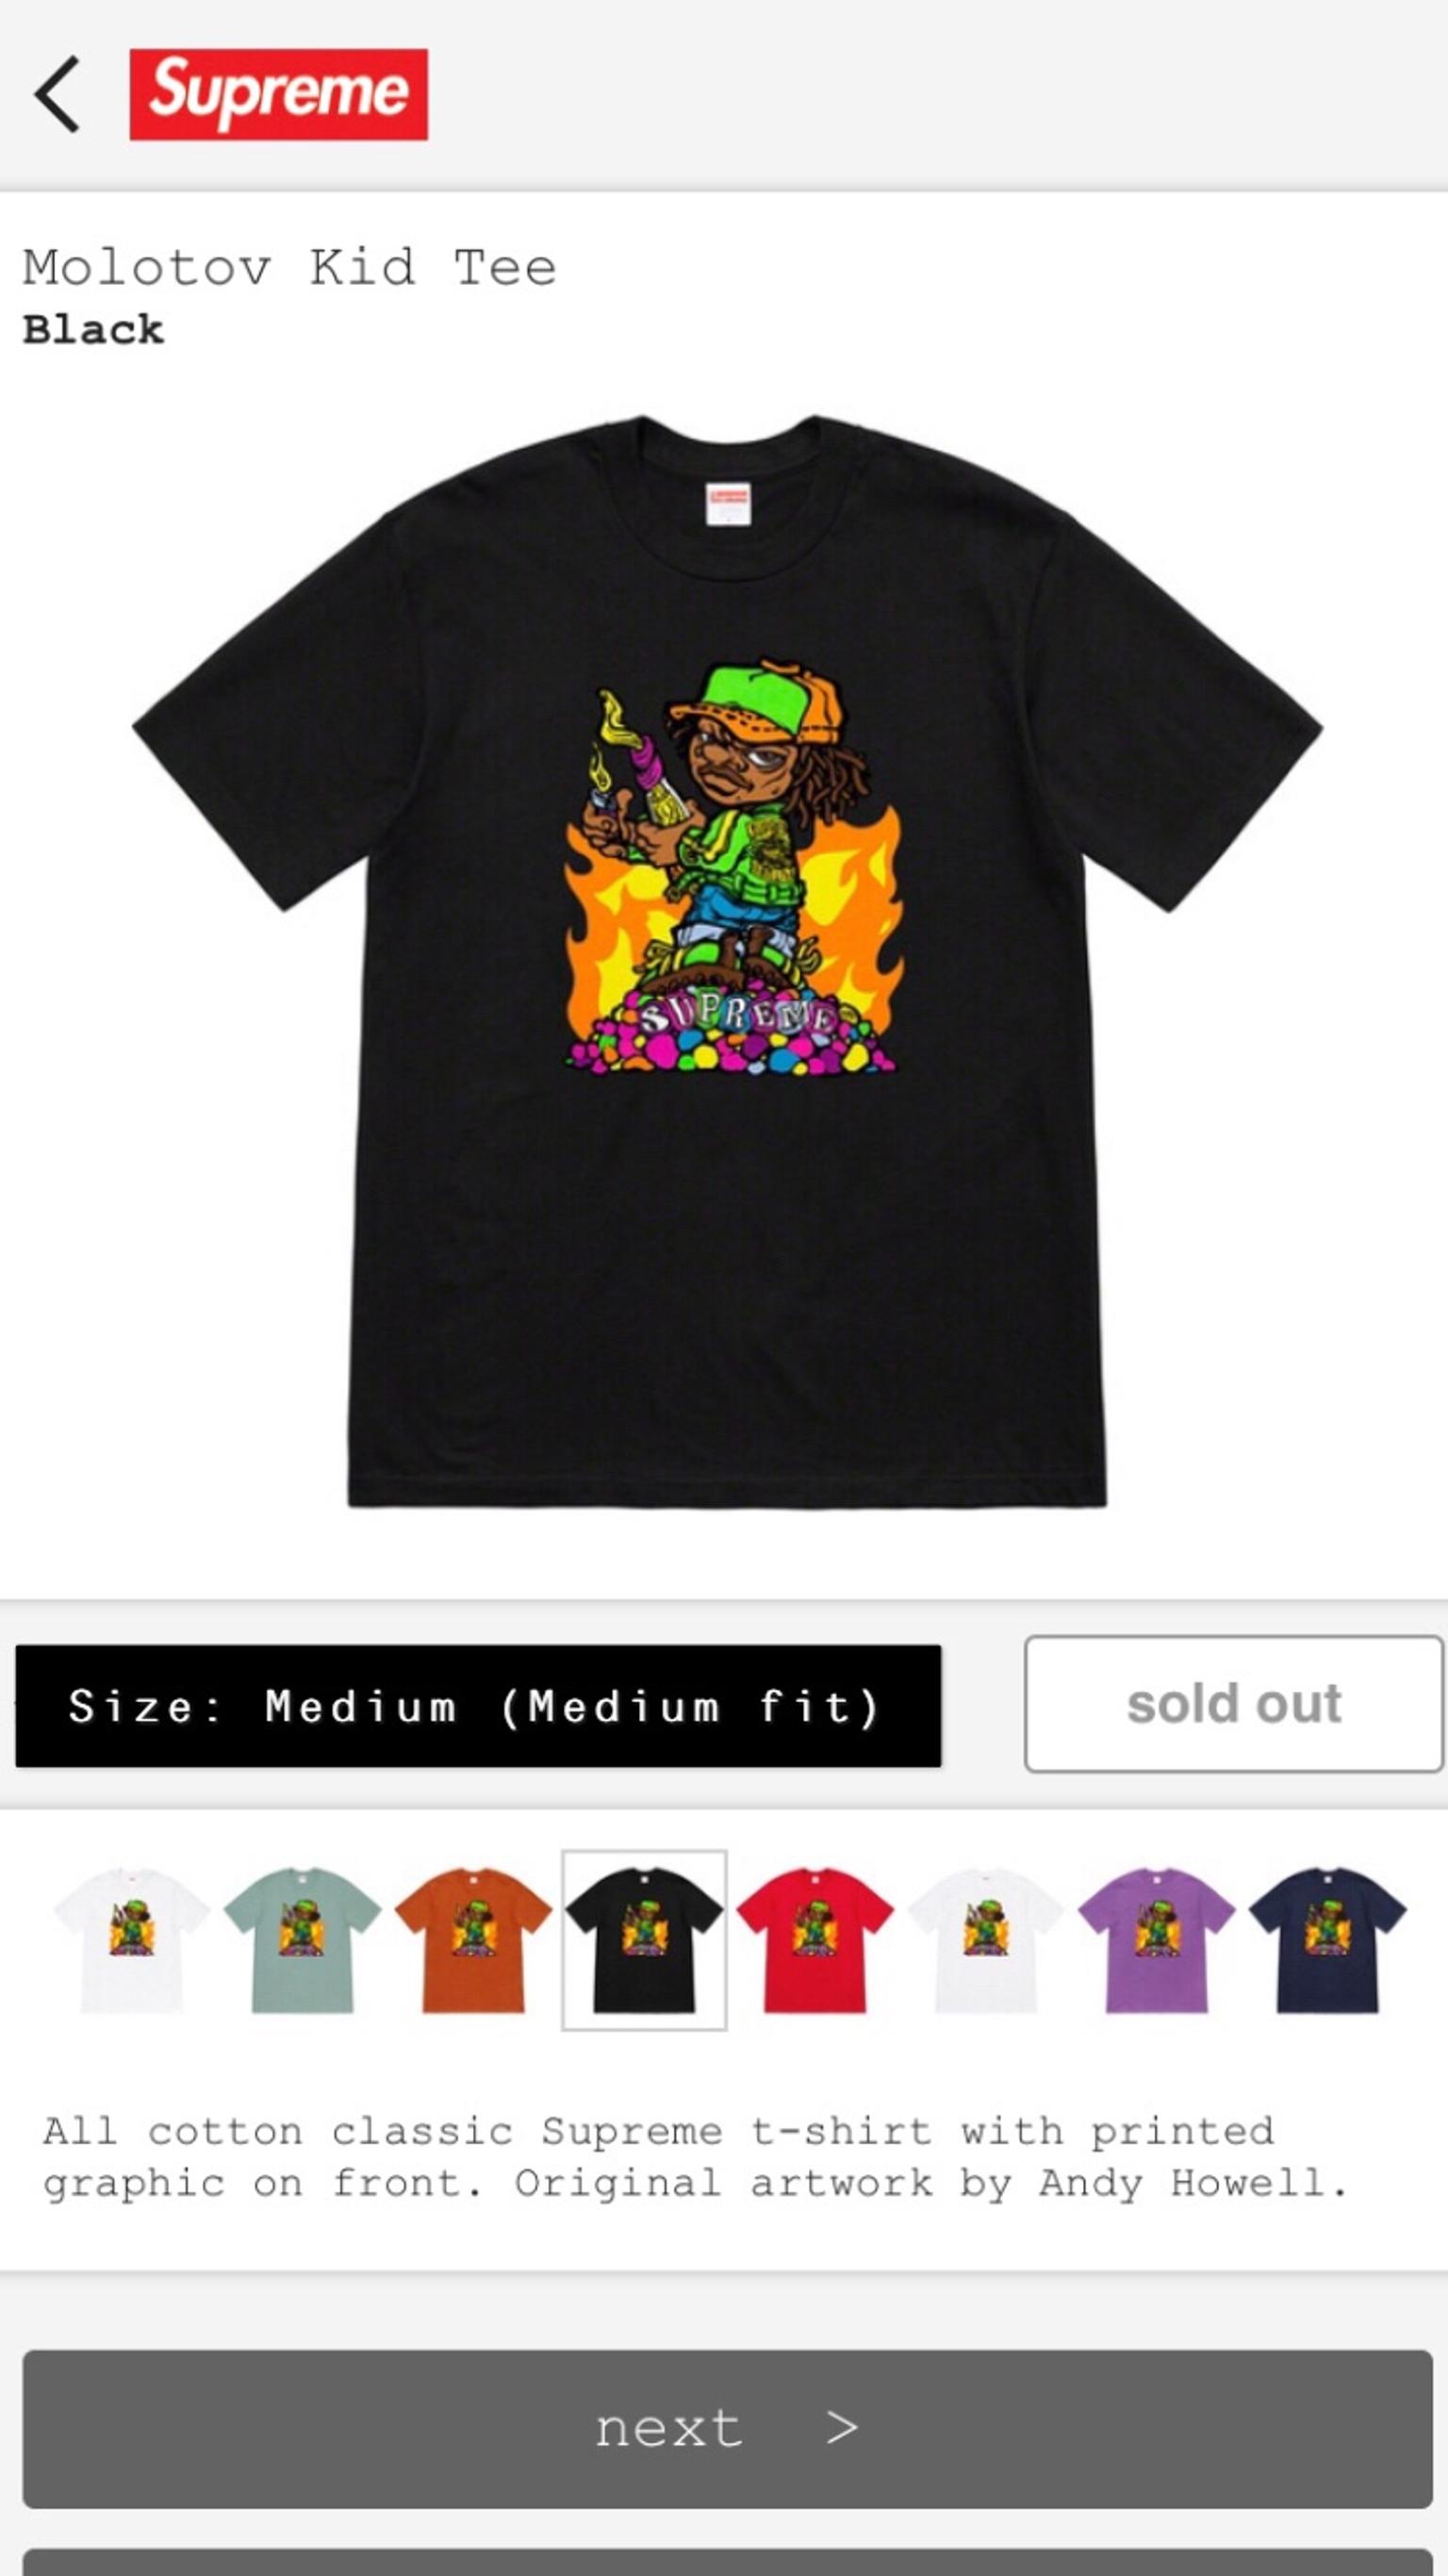 Supreme SS19 “Molotov Kid Tee” T-Shirt  In E1 Hamlets For £100 00